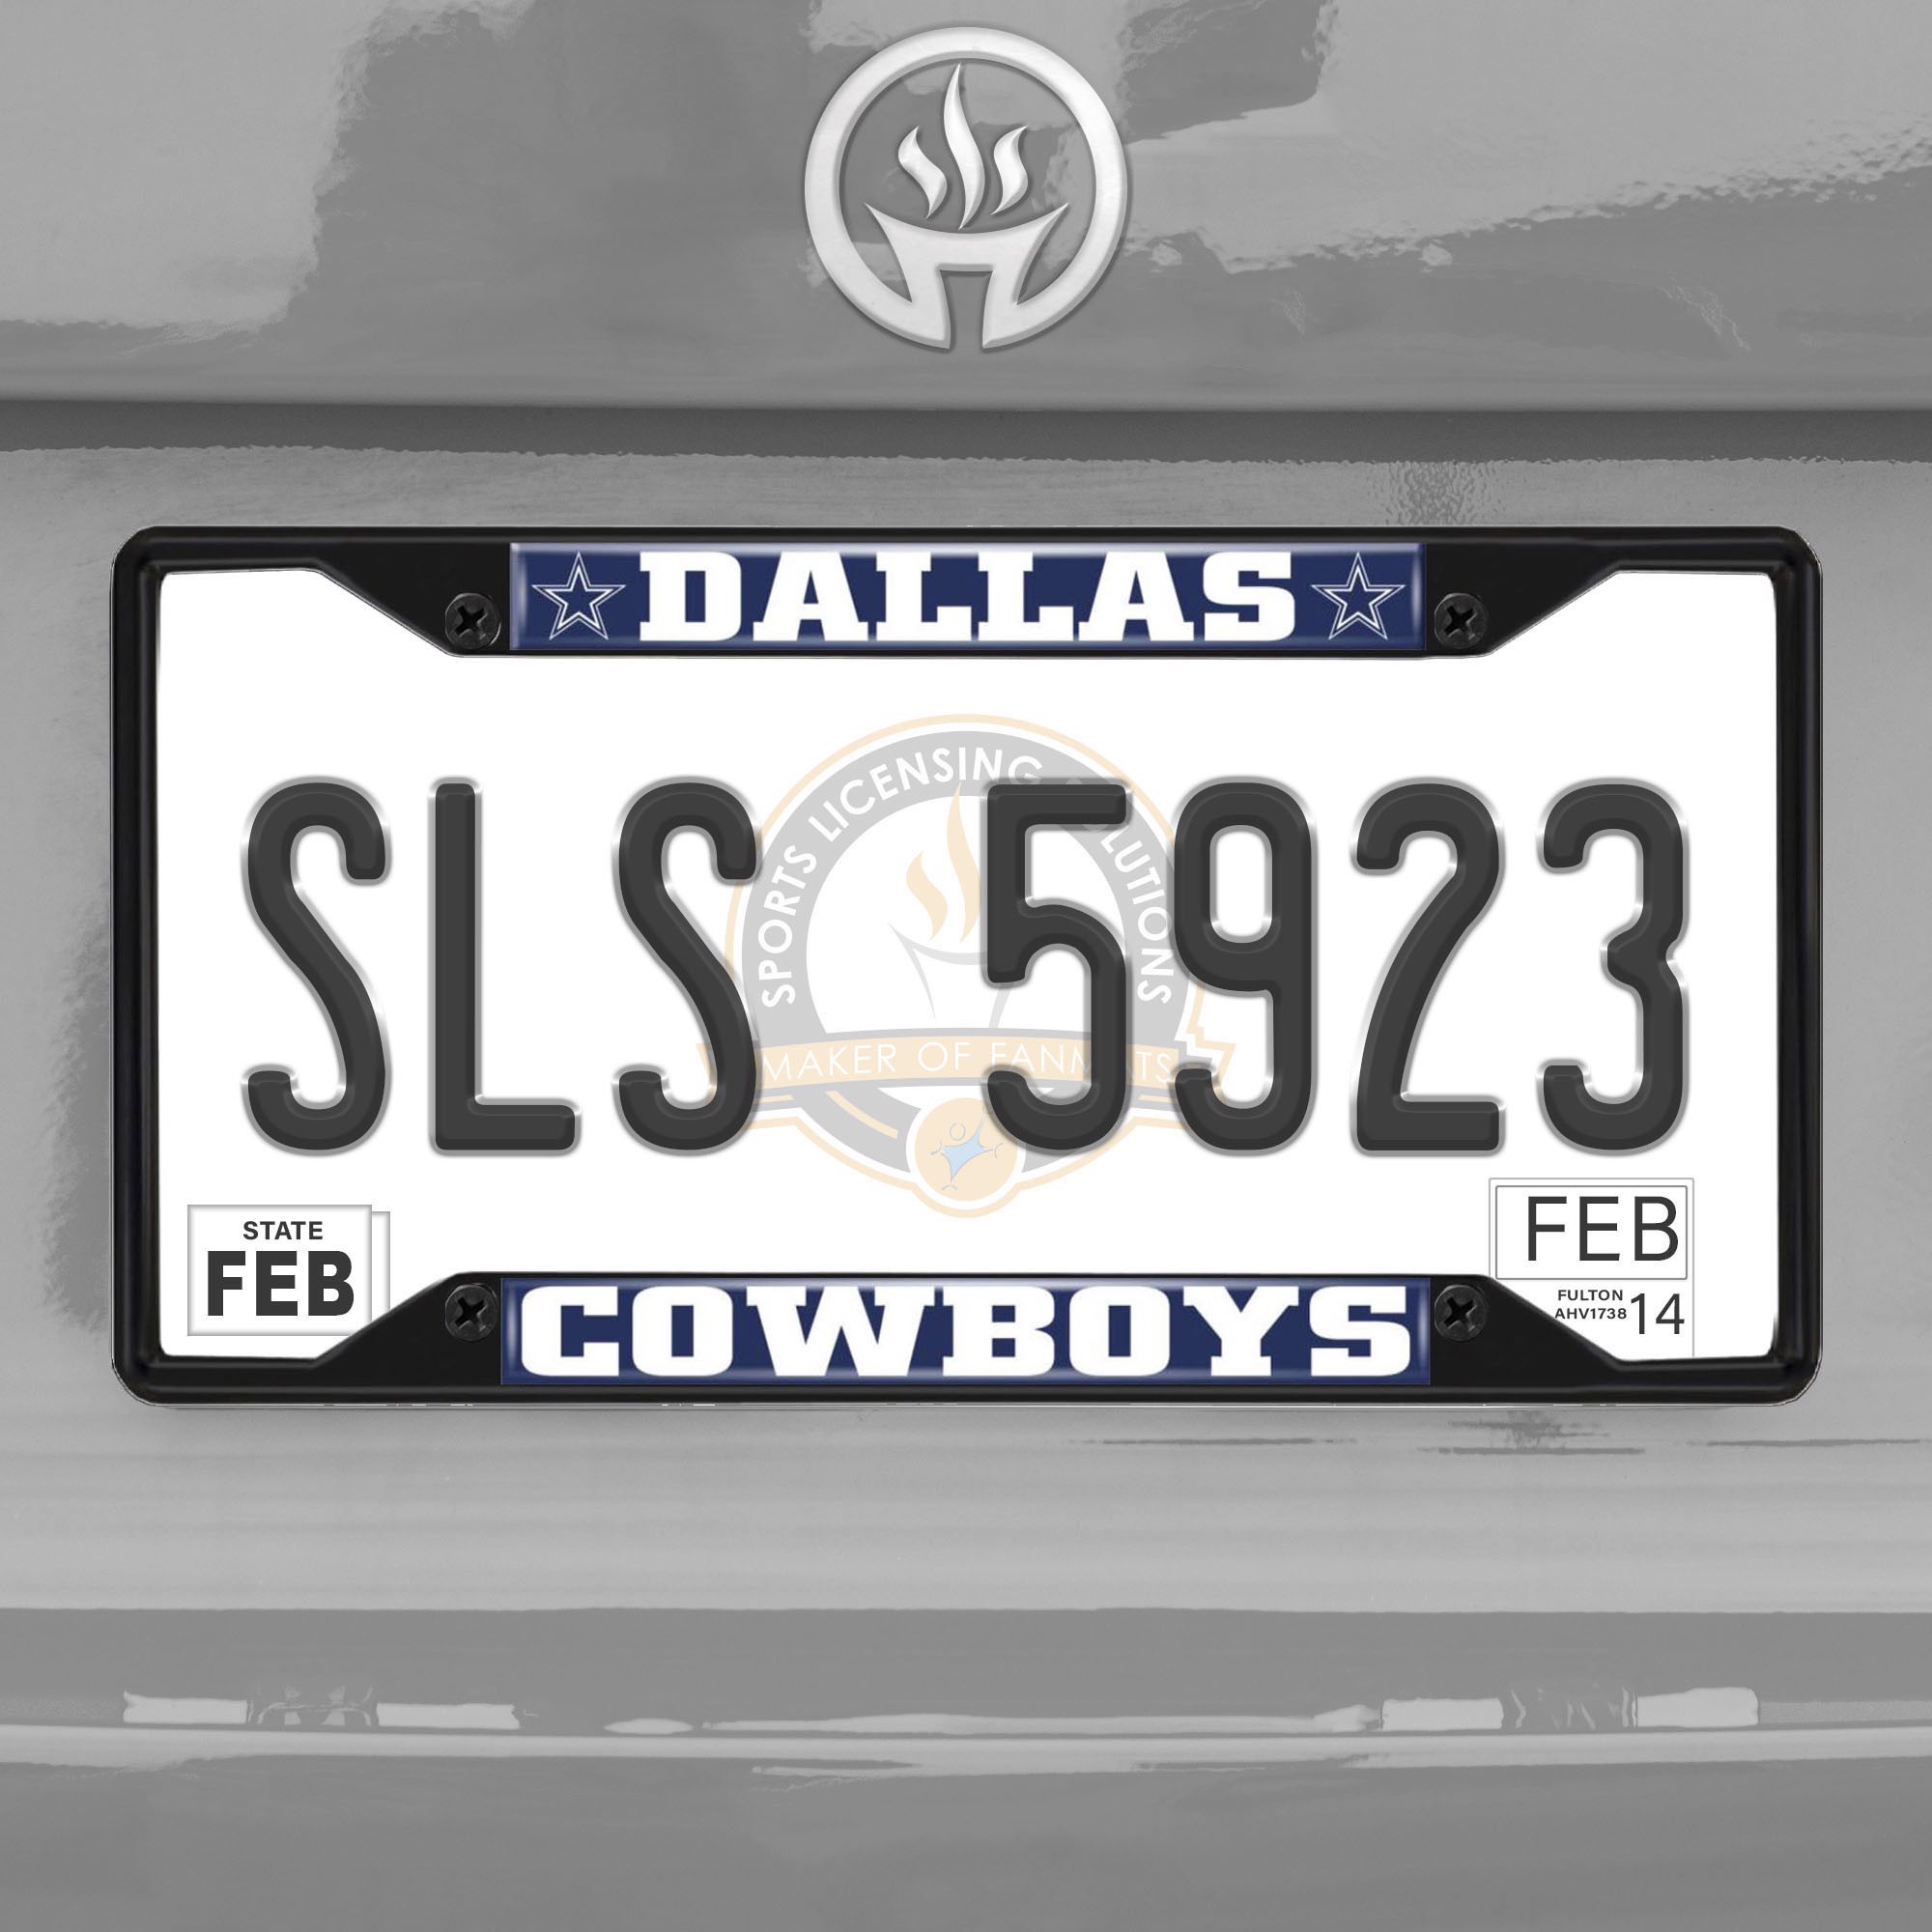 NFL Dallas Cowboys Metal License Plate Tag